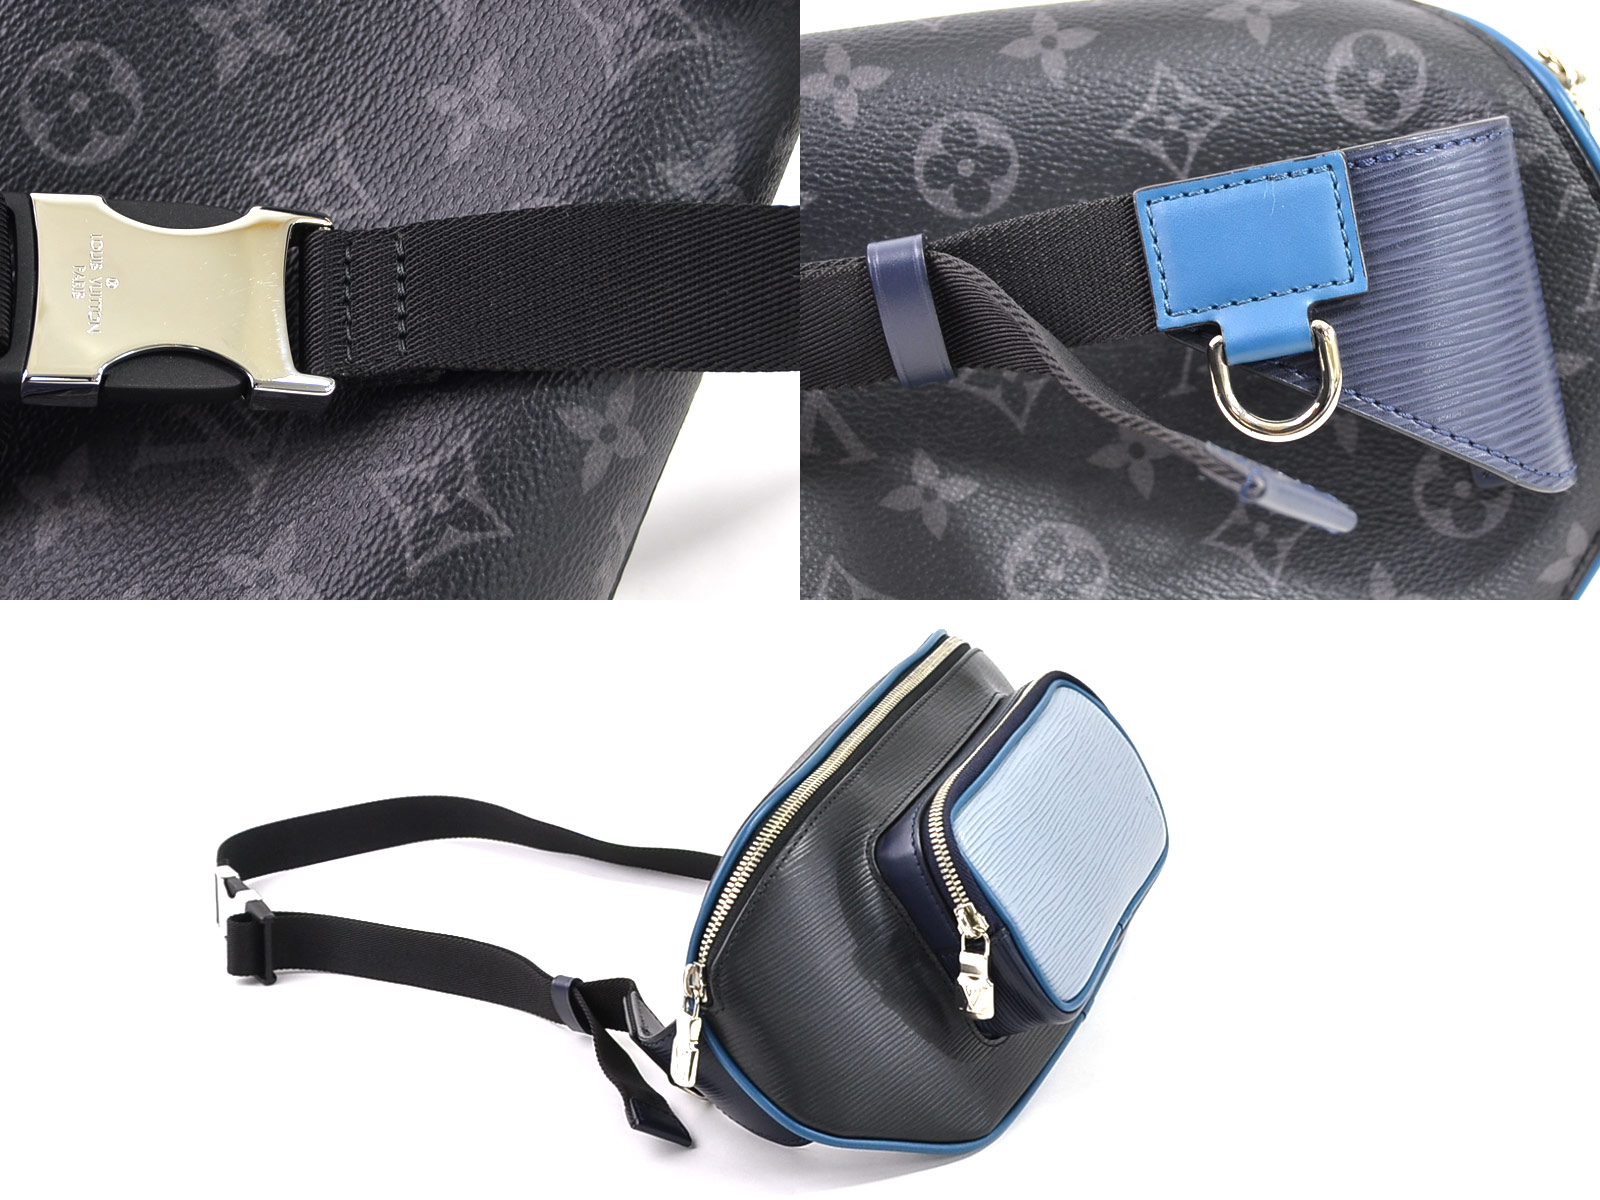 Auth Louis Vuitton Epi Monogram Eclipse Bum Bag Body Bag M53420 - 97889c | eBay